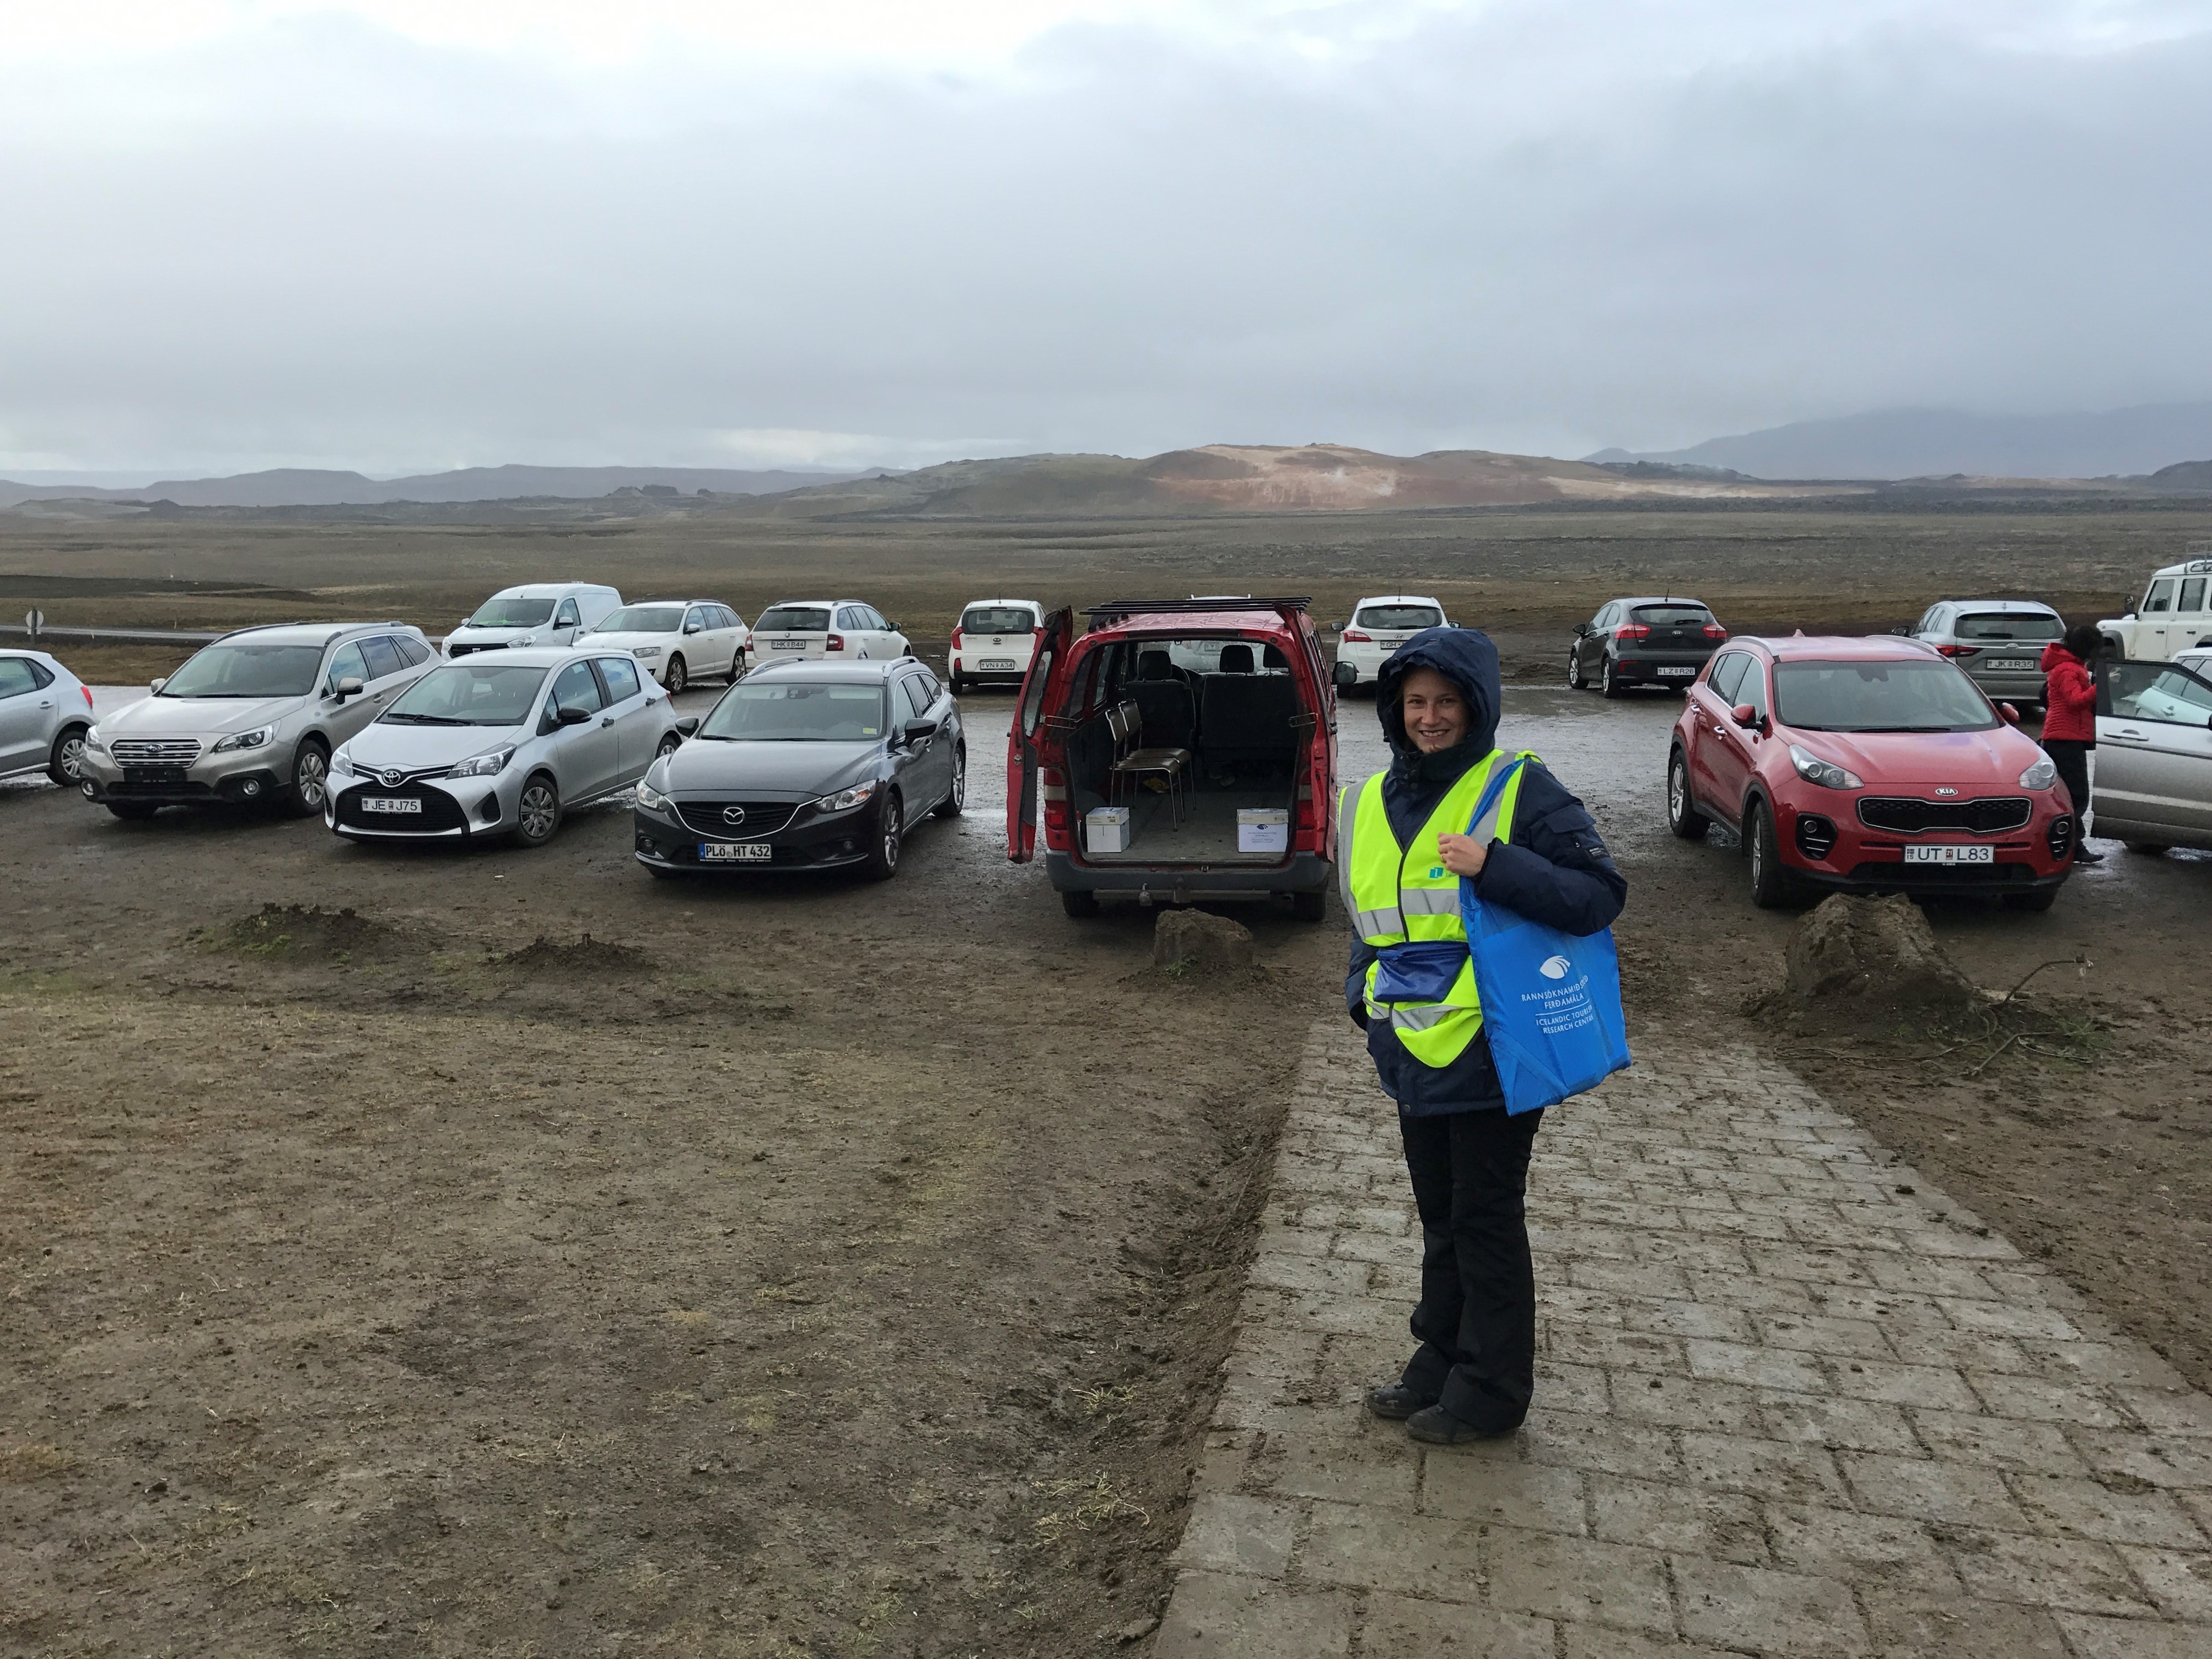 Surveyor from the ITRC in action at a survey site in 2017 ©Auður H Ingólfsdóttir